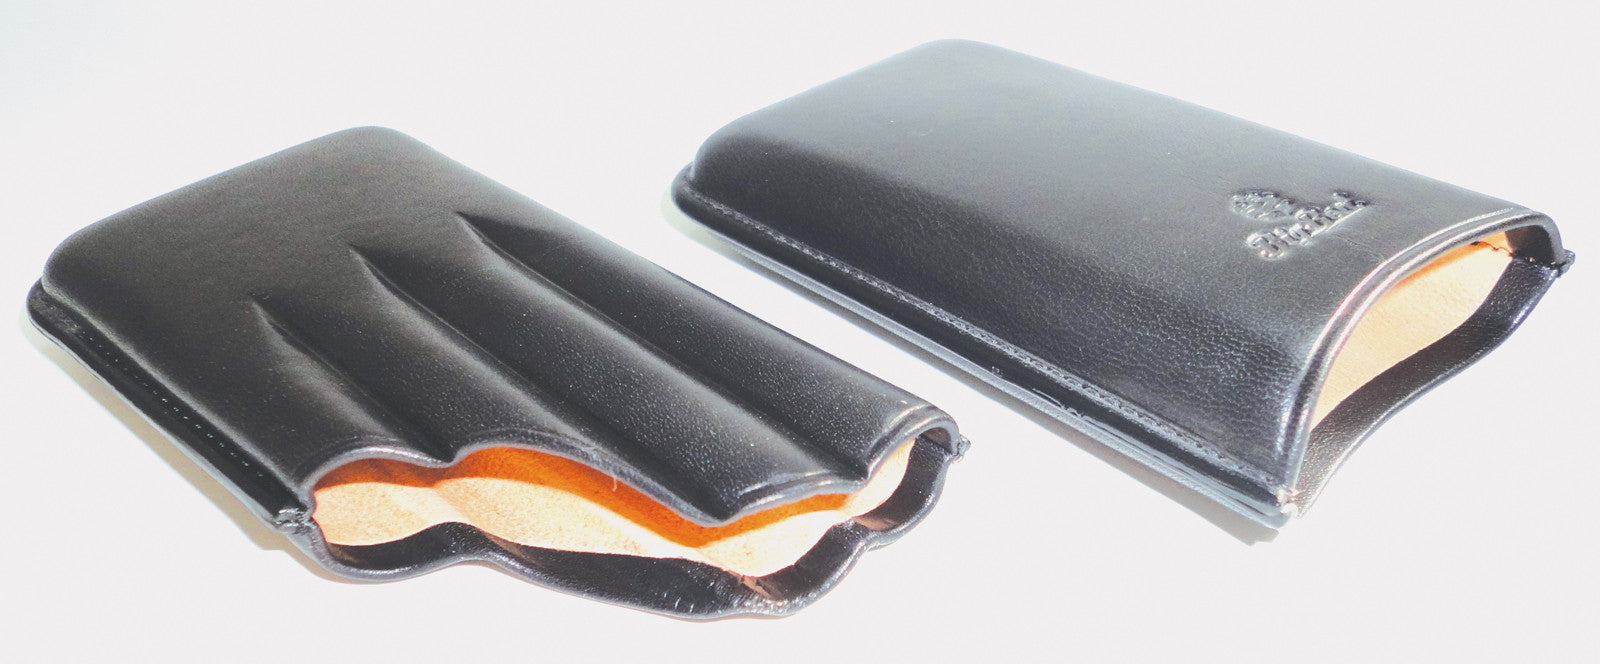 BigBen genuine leather cigar case 4 senoritas 115 mm bl-bl 656.454.410